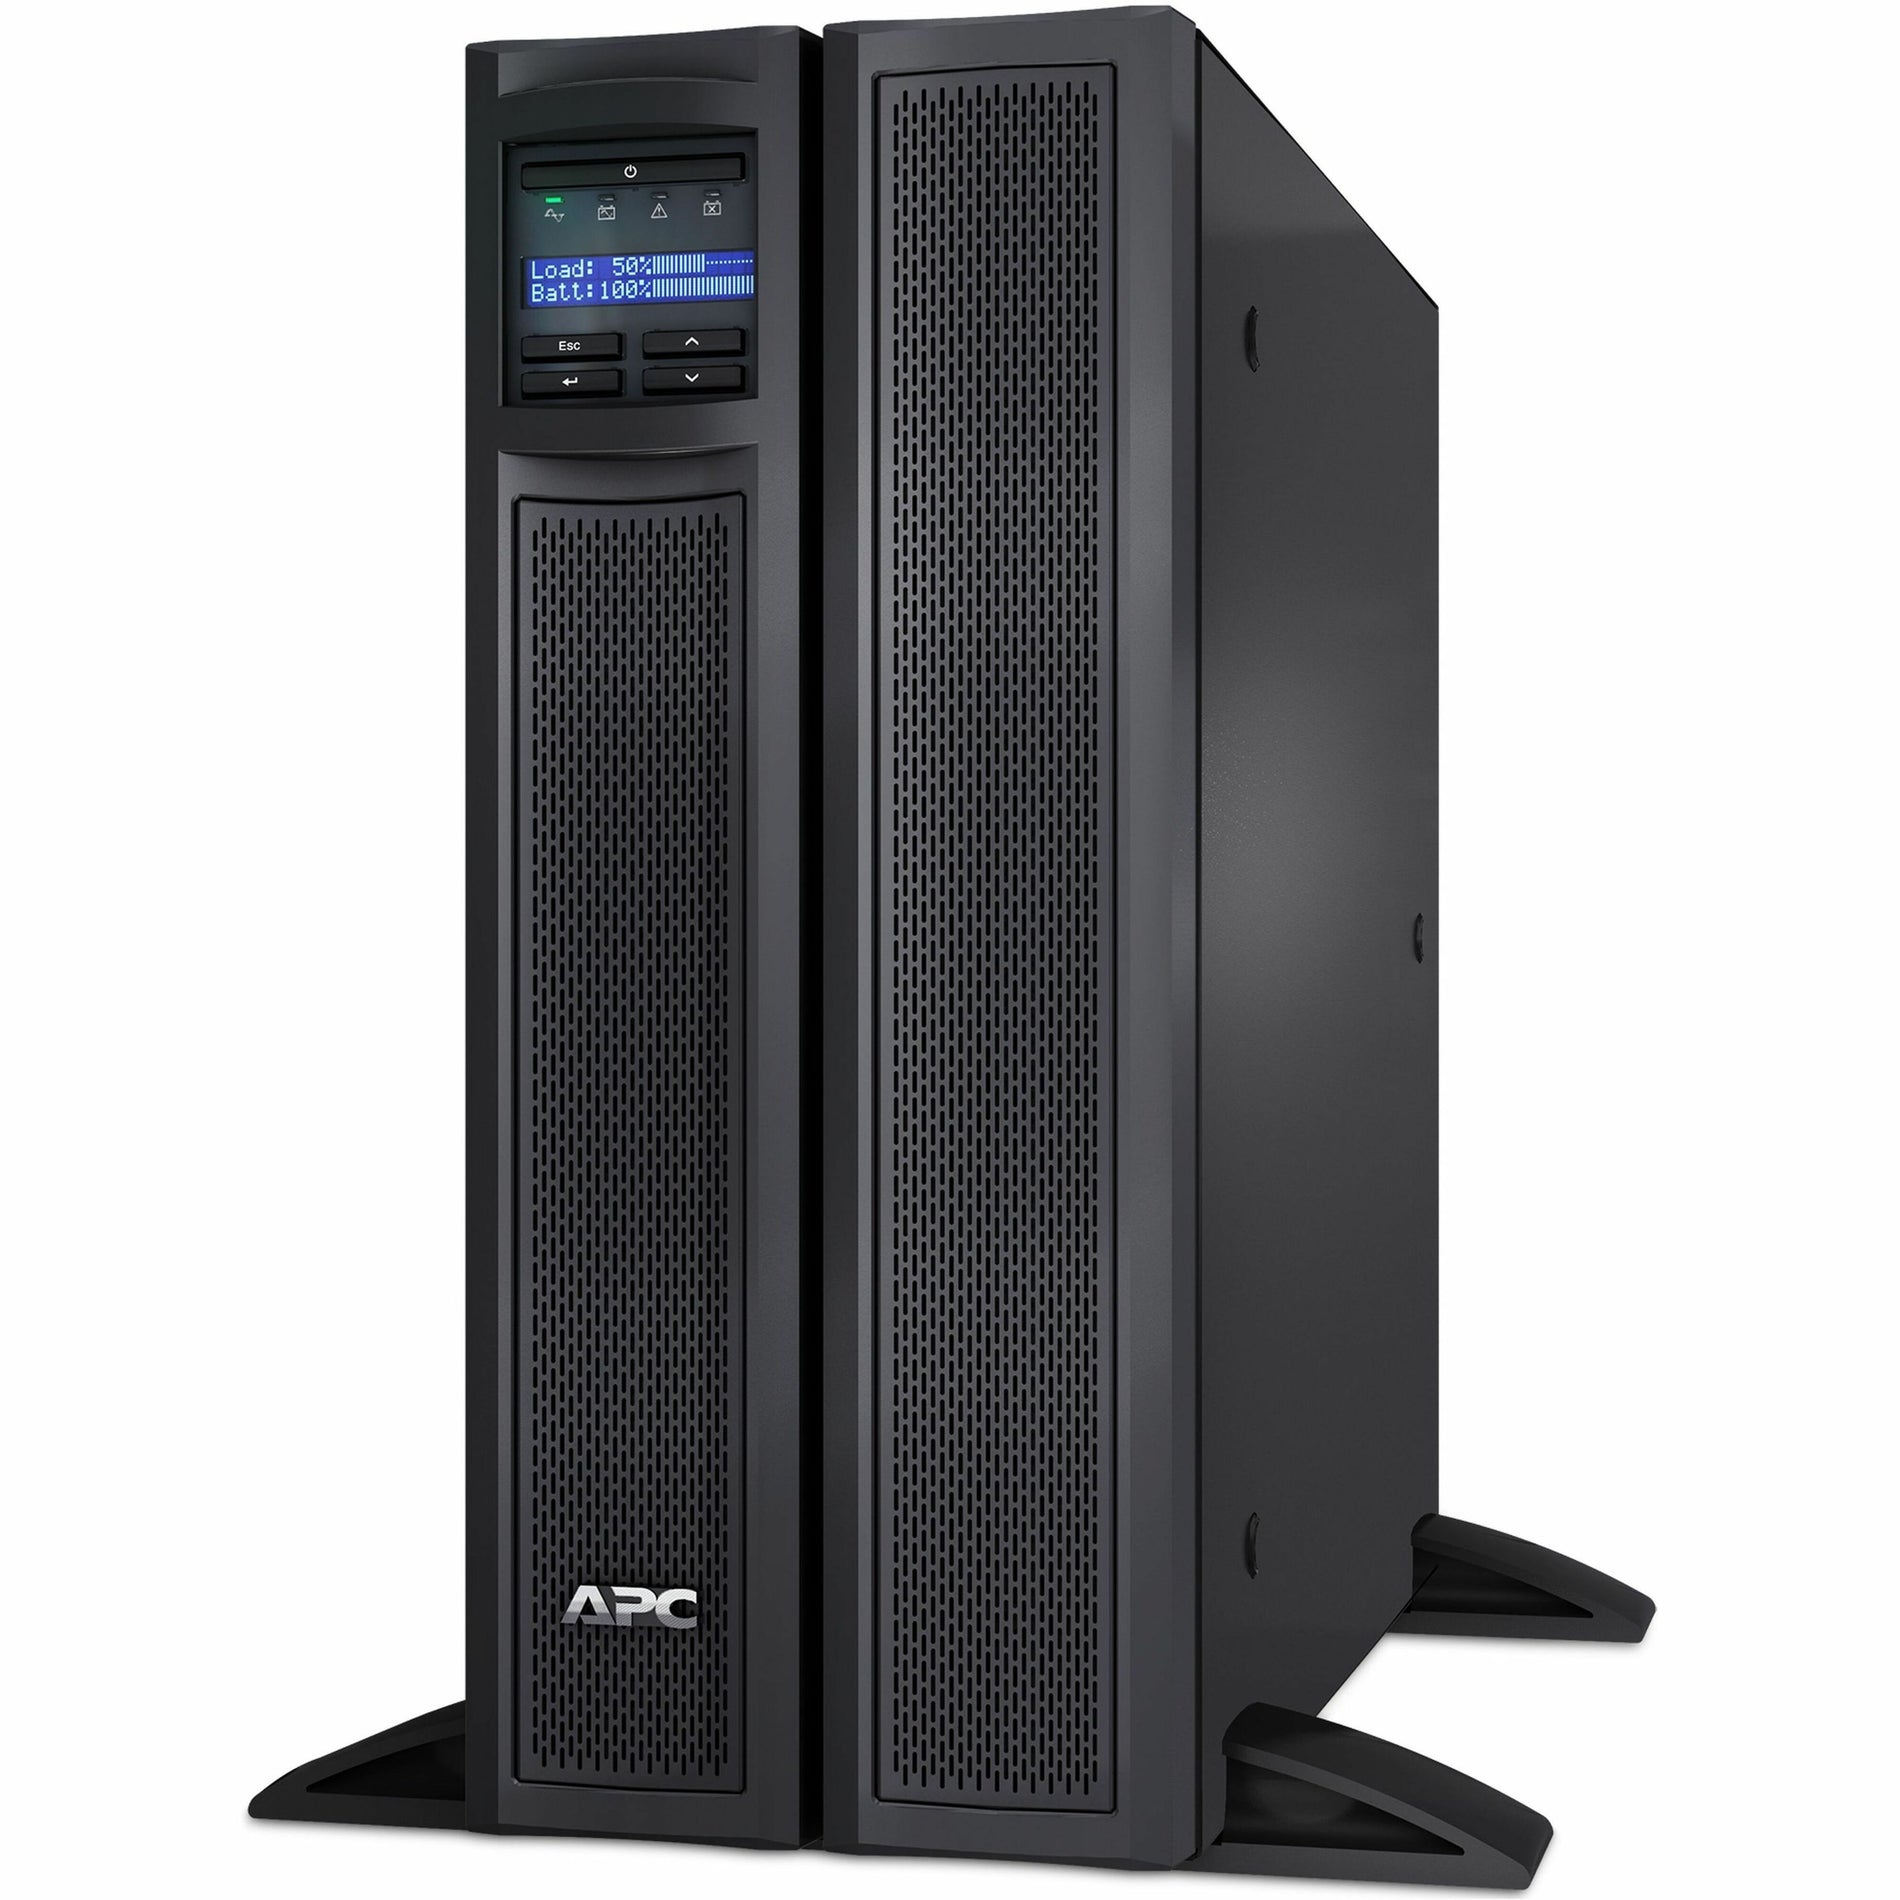 APC Smart-UPS 3000VA Tower/Rack Mountable UPS (SMX3000HVNC)